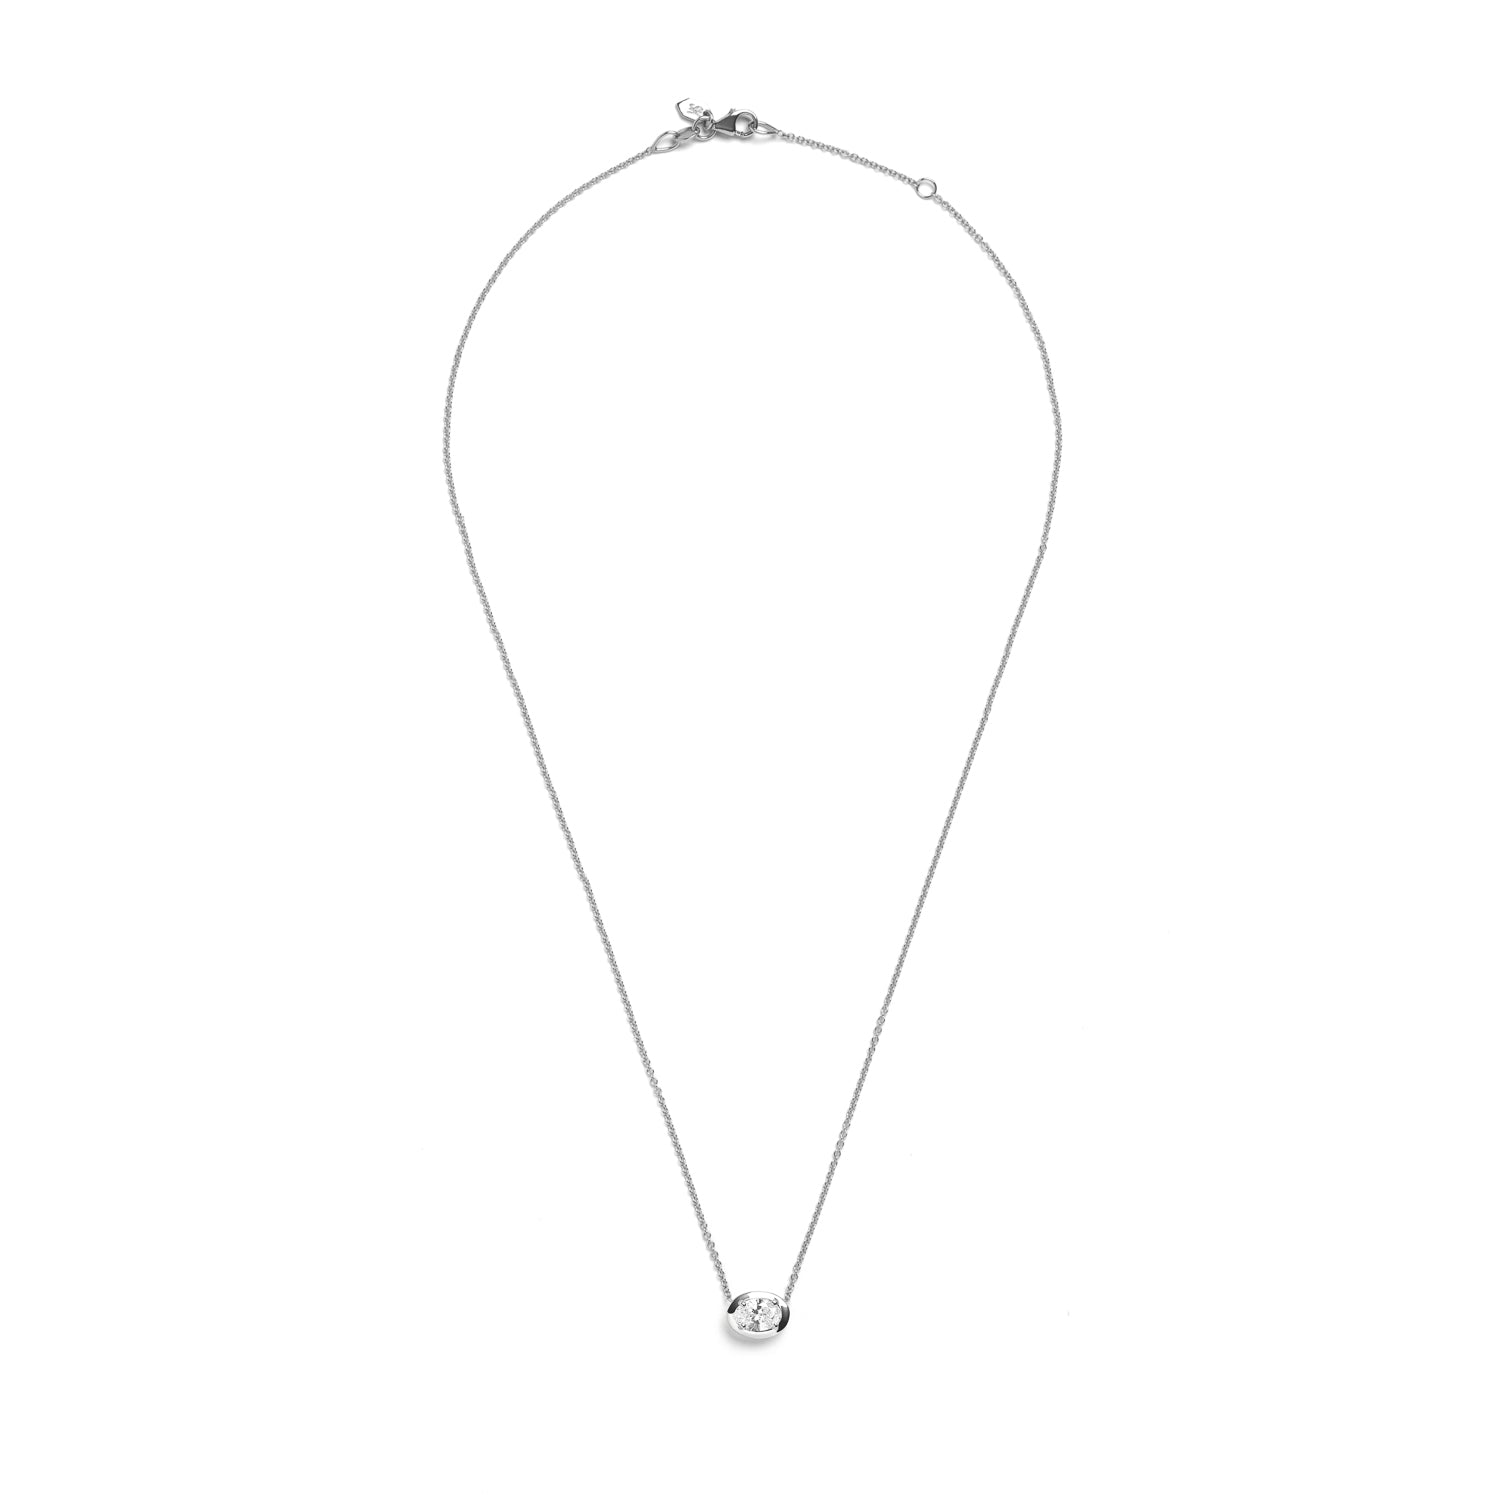 Selin Kent 14K Zadie Necklace with Oval White Diamond